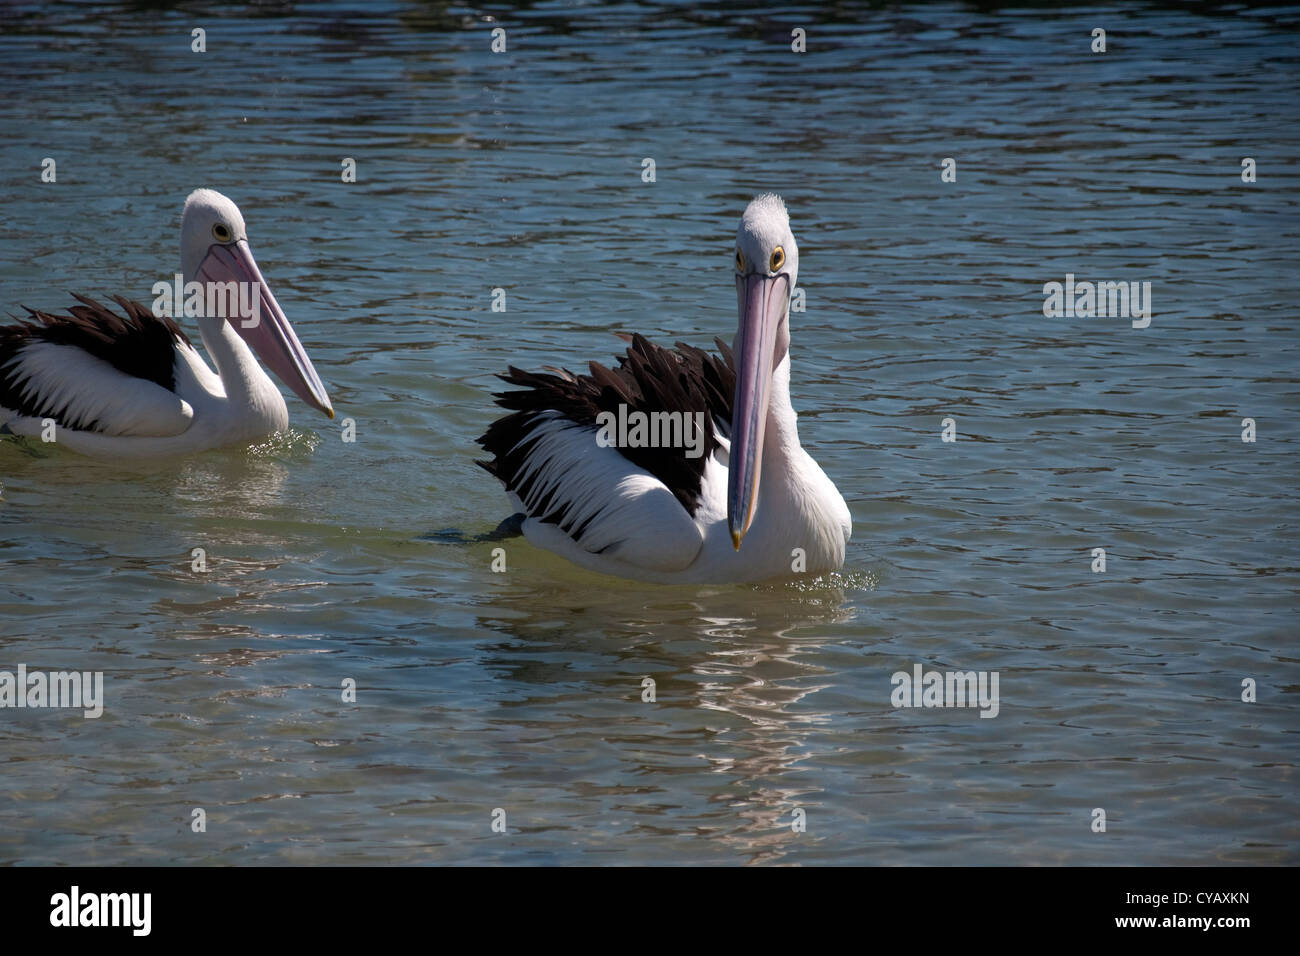 a pair of pelicans swimming in Philip Island australia Stock Photo